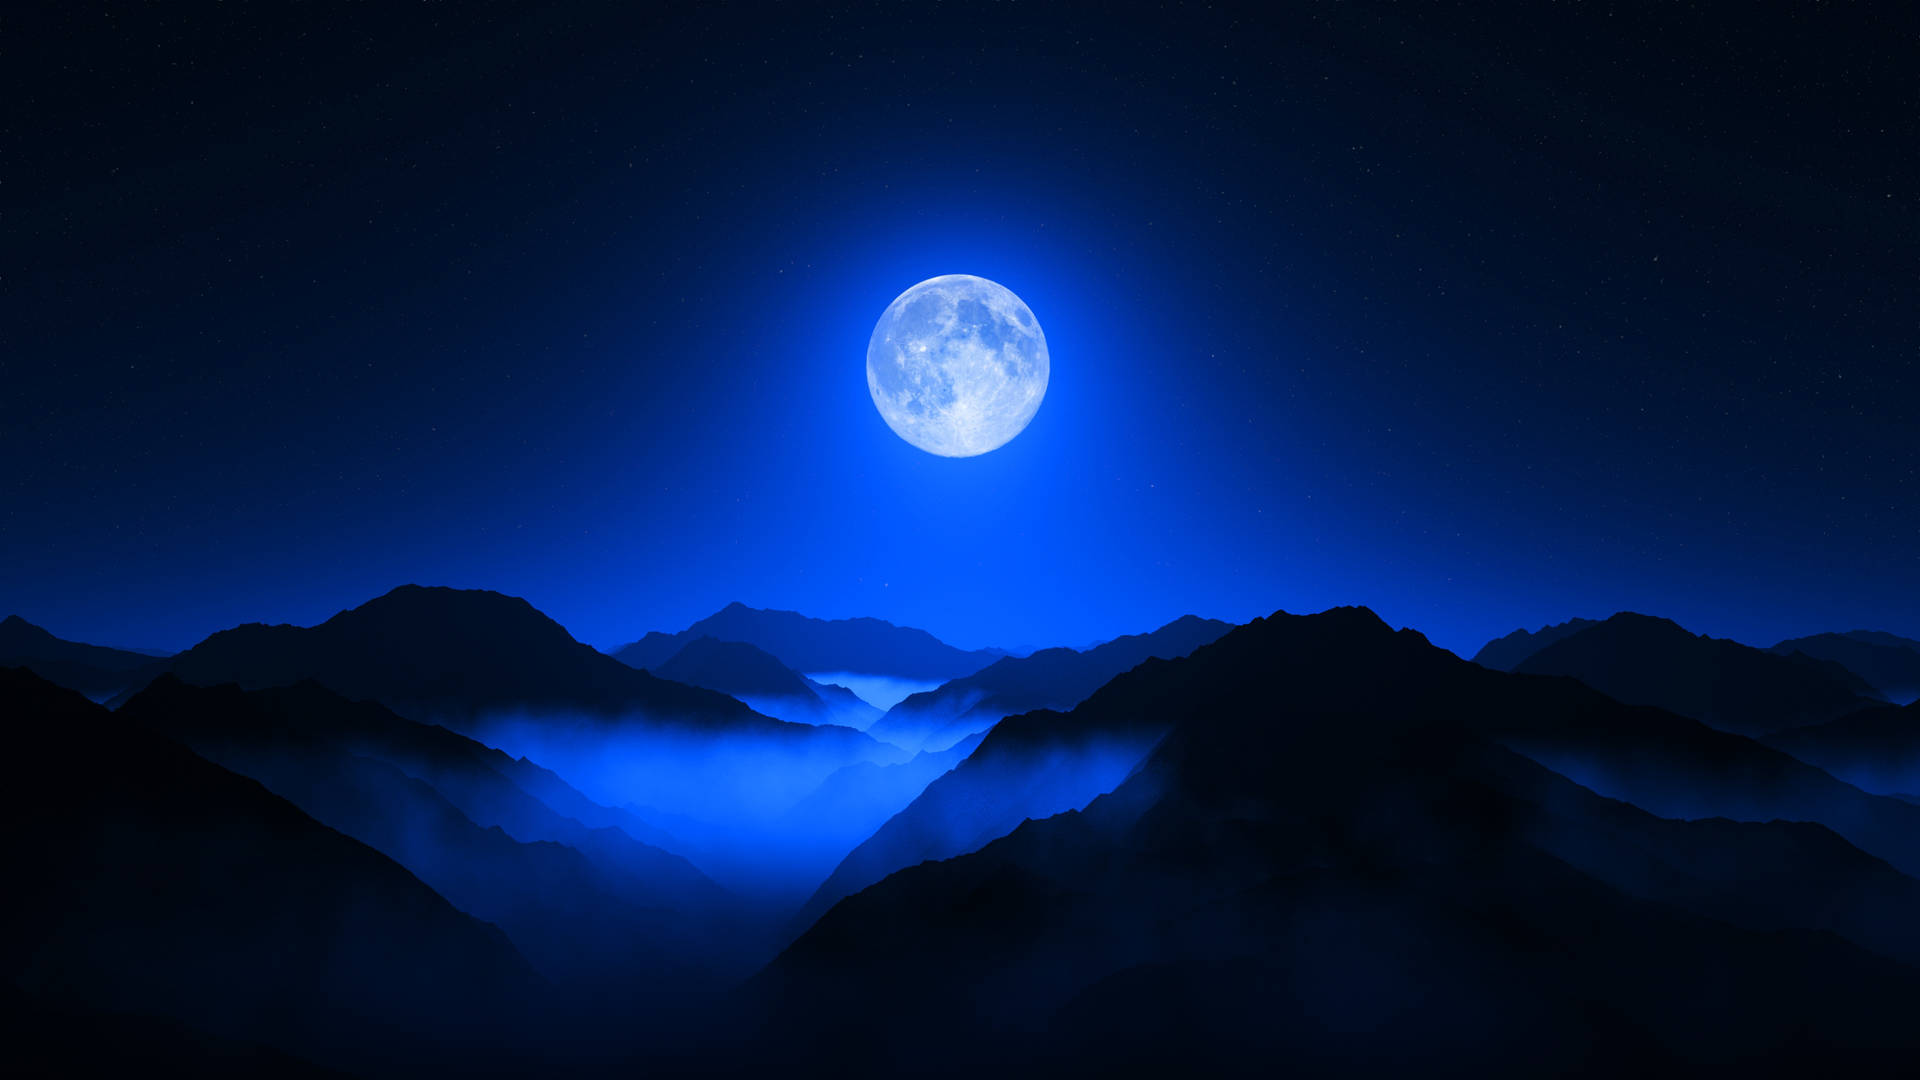 Blue Beautiful Full Moon Mountain Ranges Background